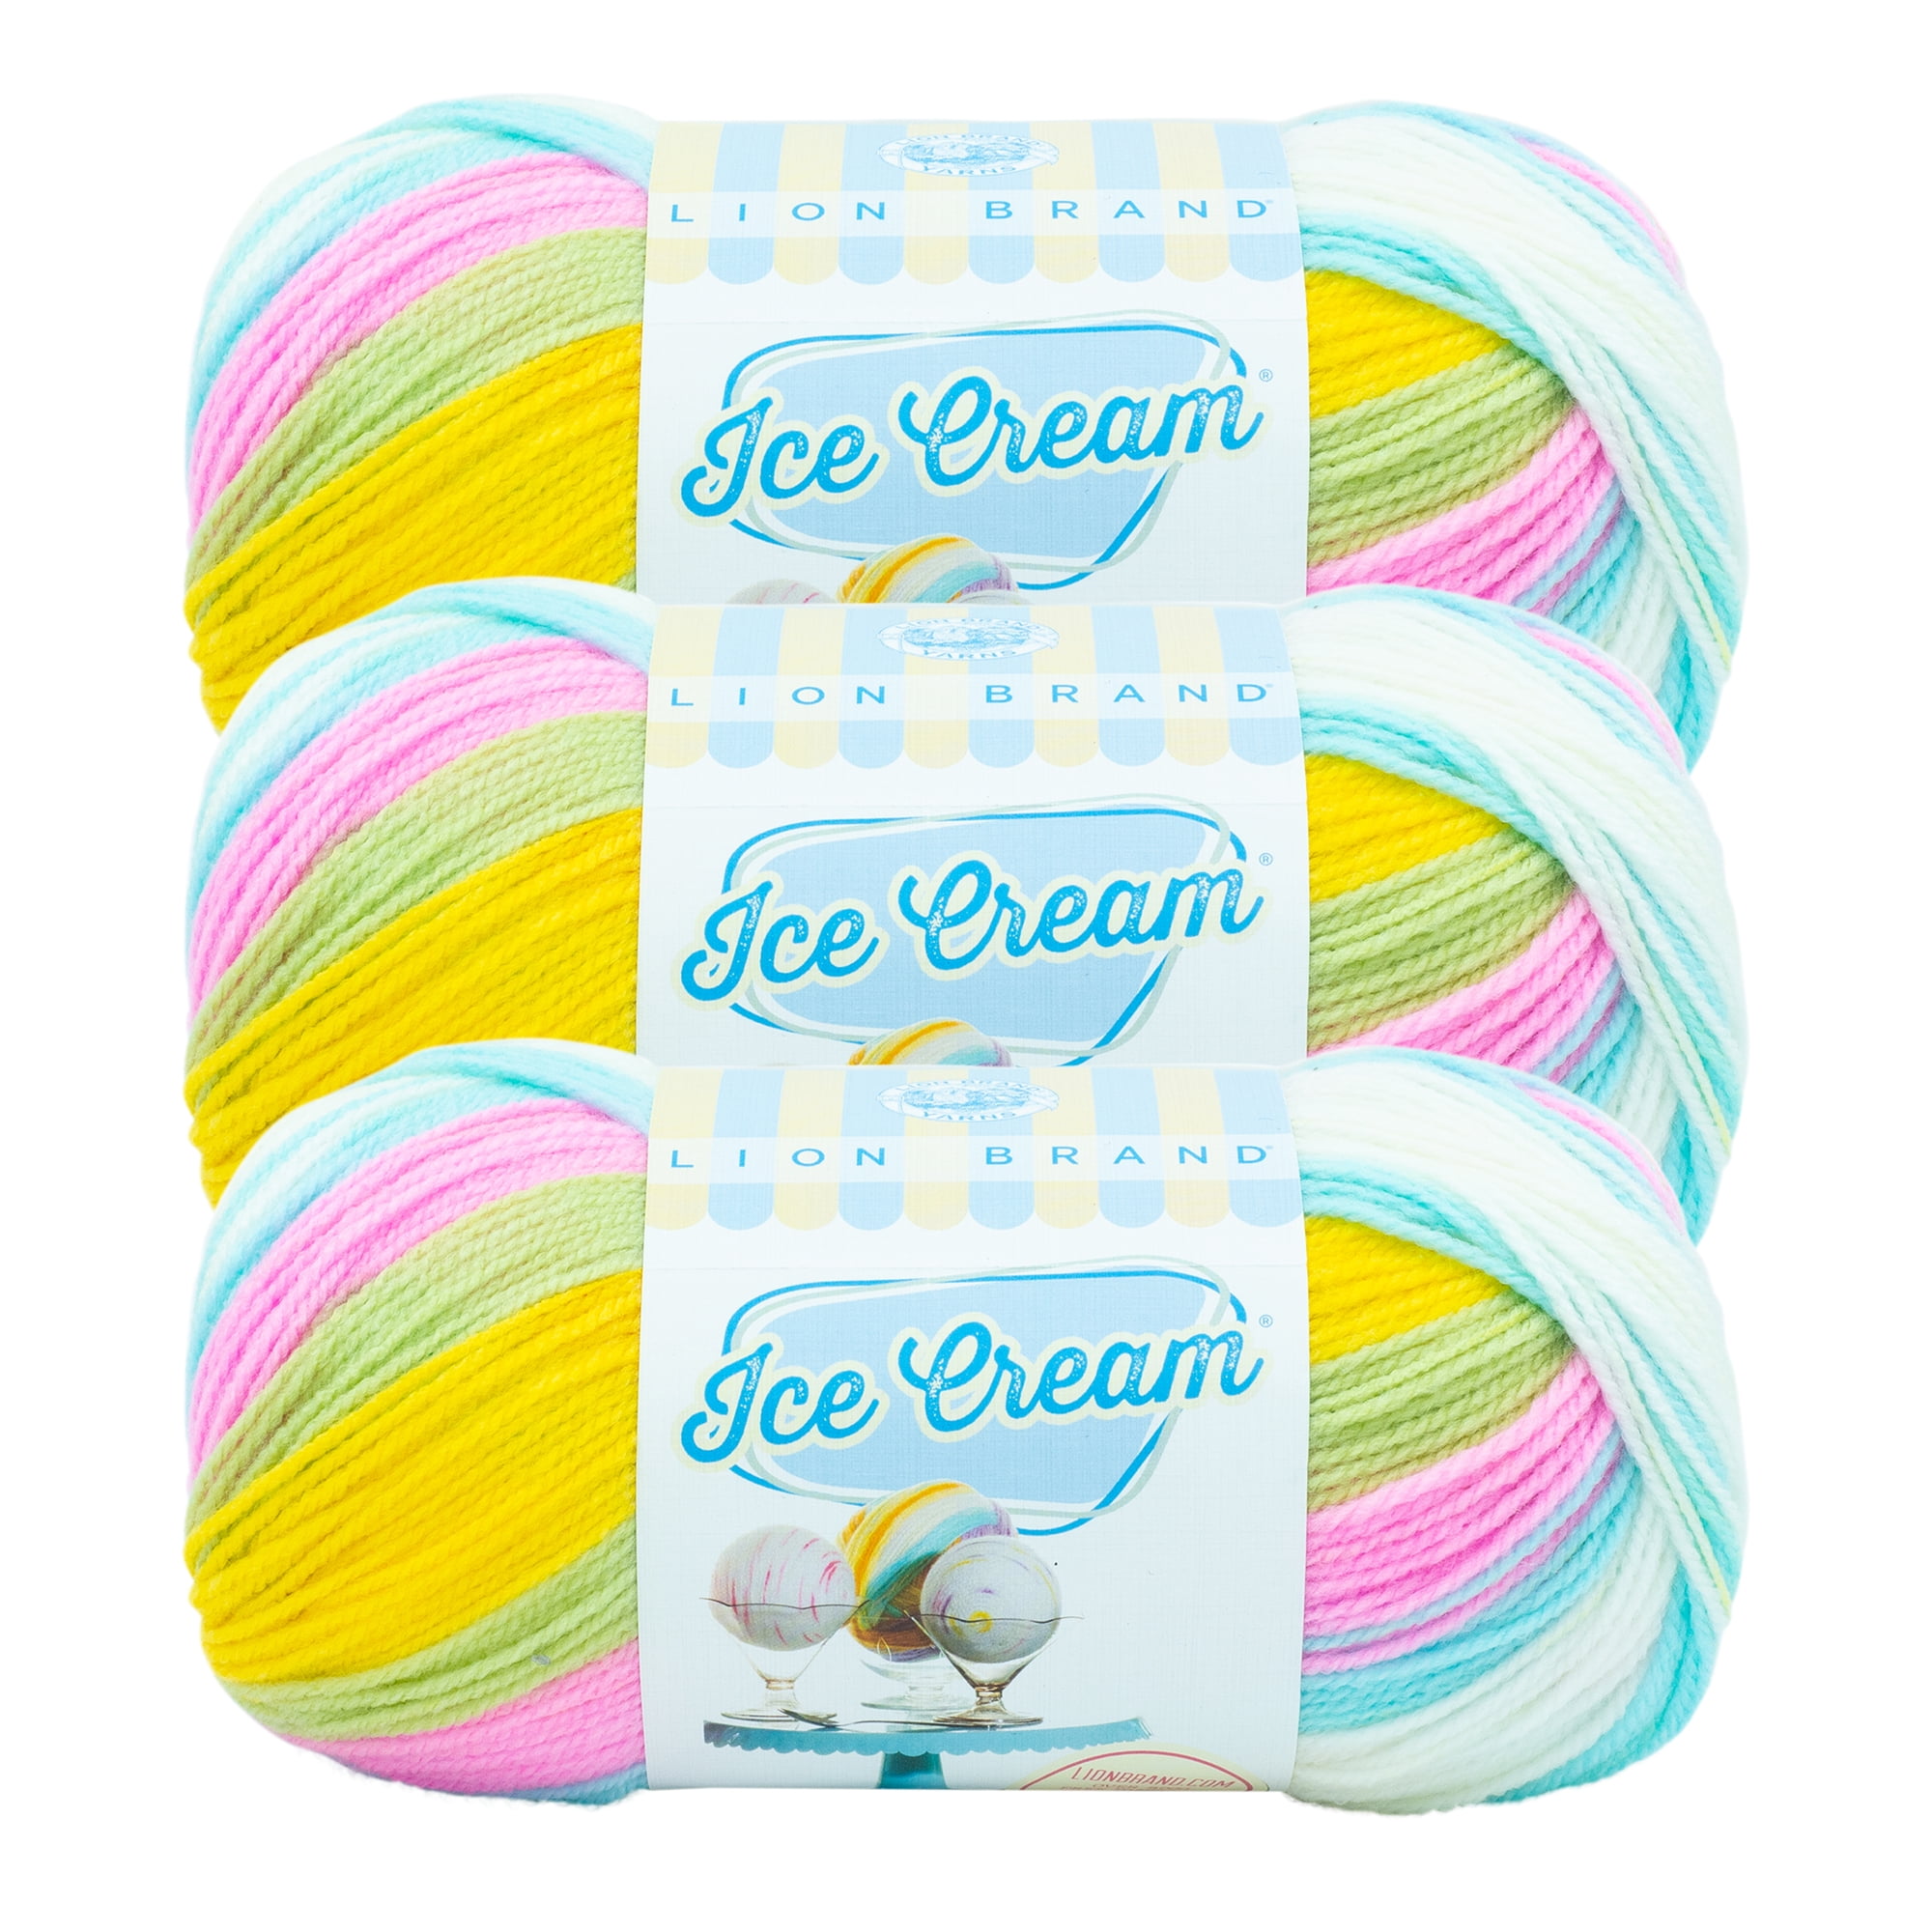 Lion Brand Yarn Ice Cream Bunny Tracks Light Acrylic Multi-color Yarn 3 Pack